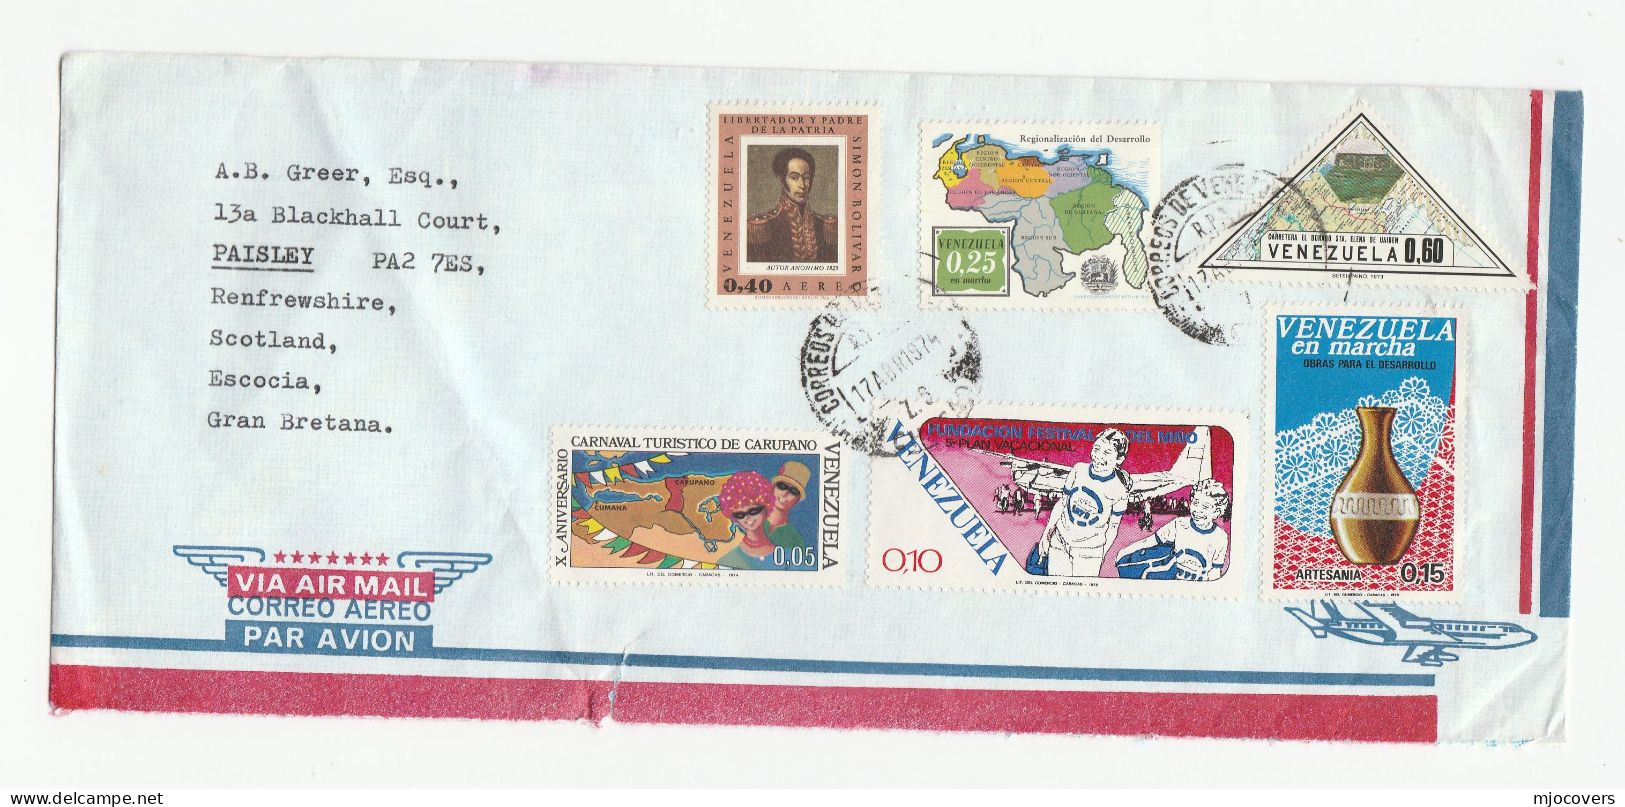 1974 VENZUELA Multi Stamps CARNIVAL Children TRIANGULAR  Aviation POTTERY Cover Air Mail To GB - Venezuela